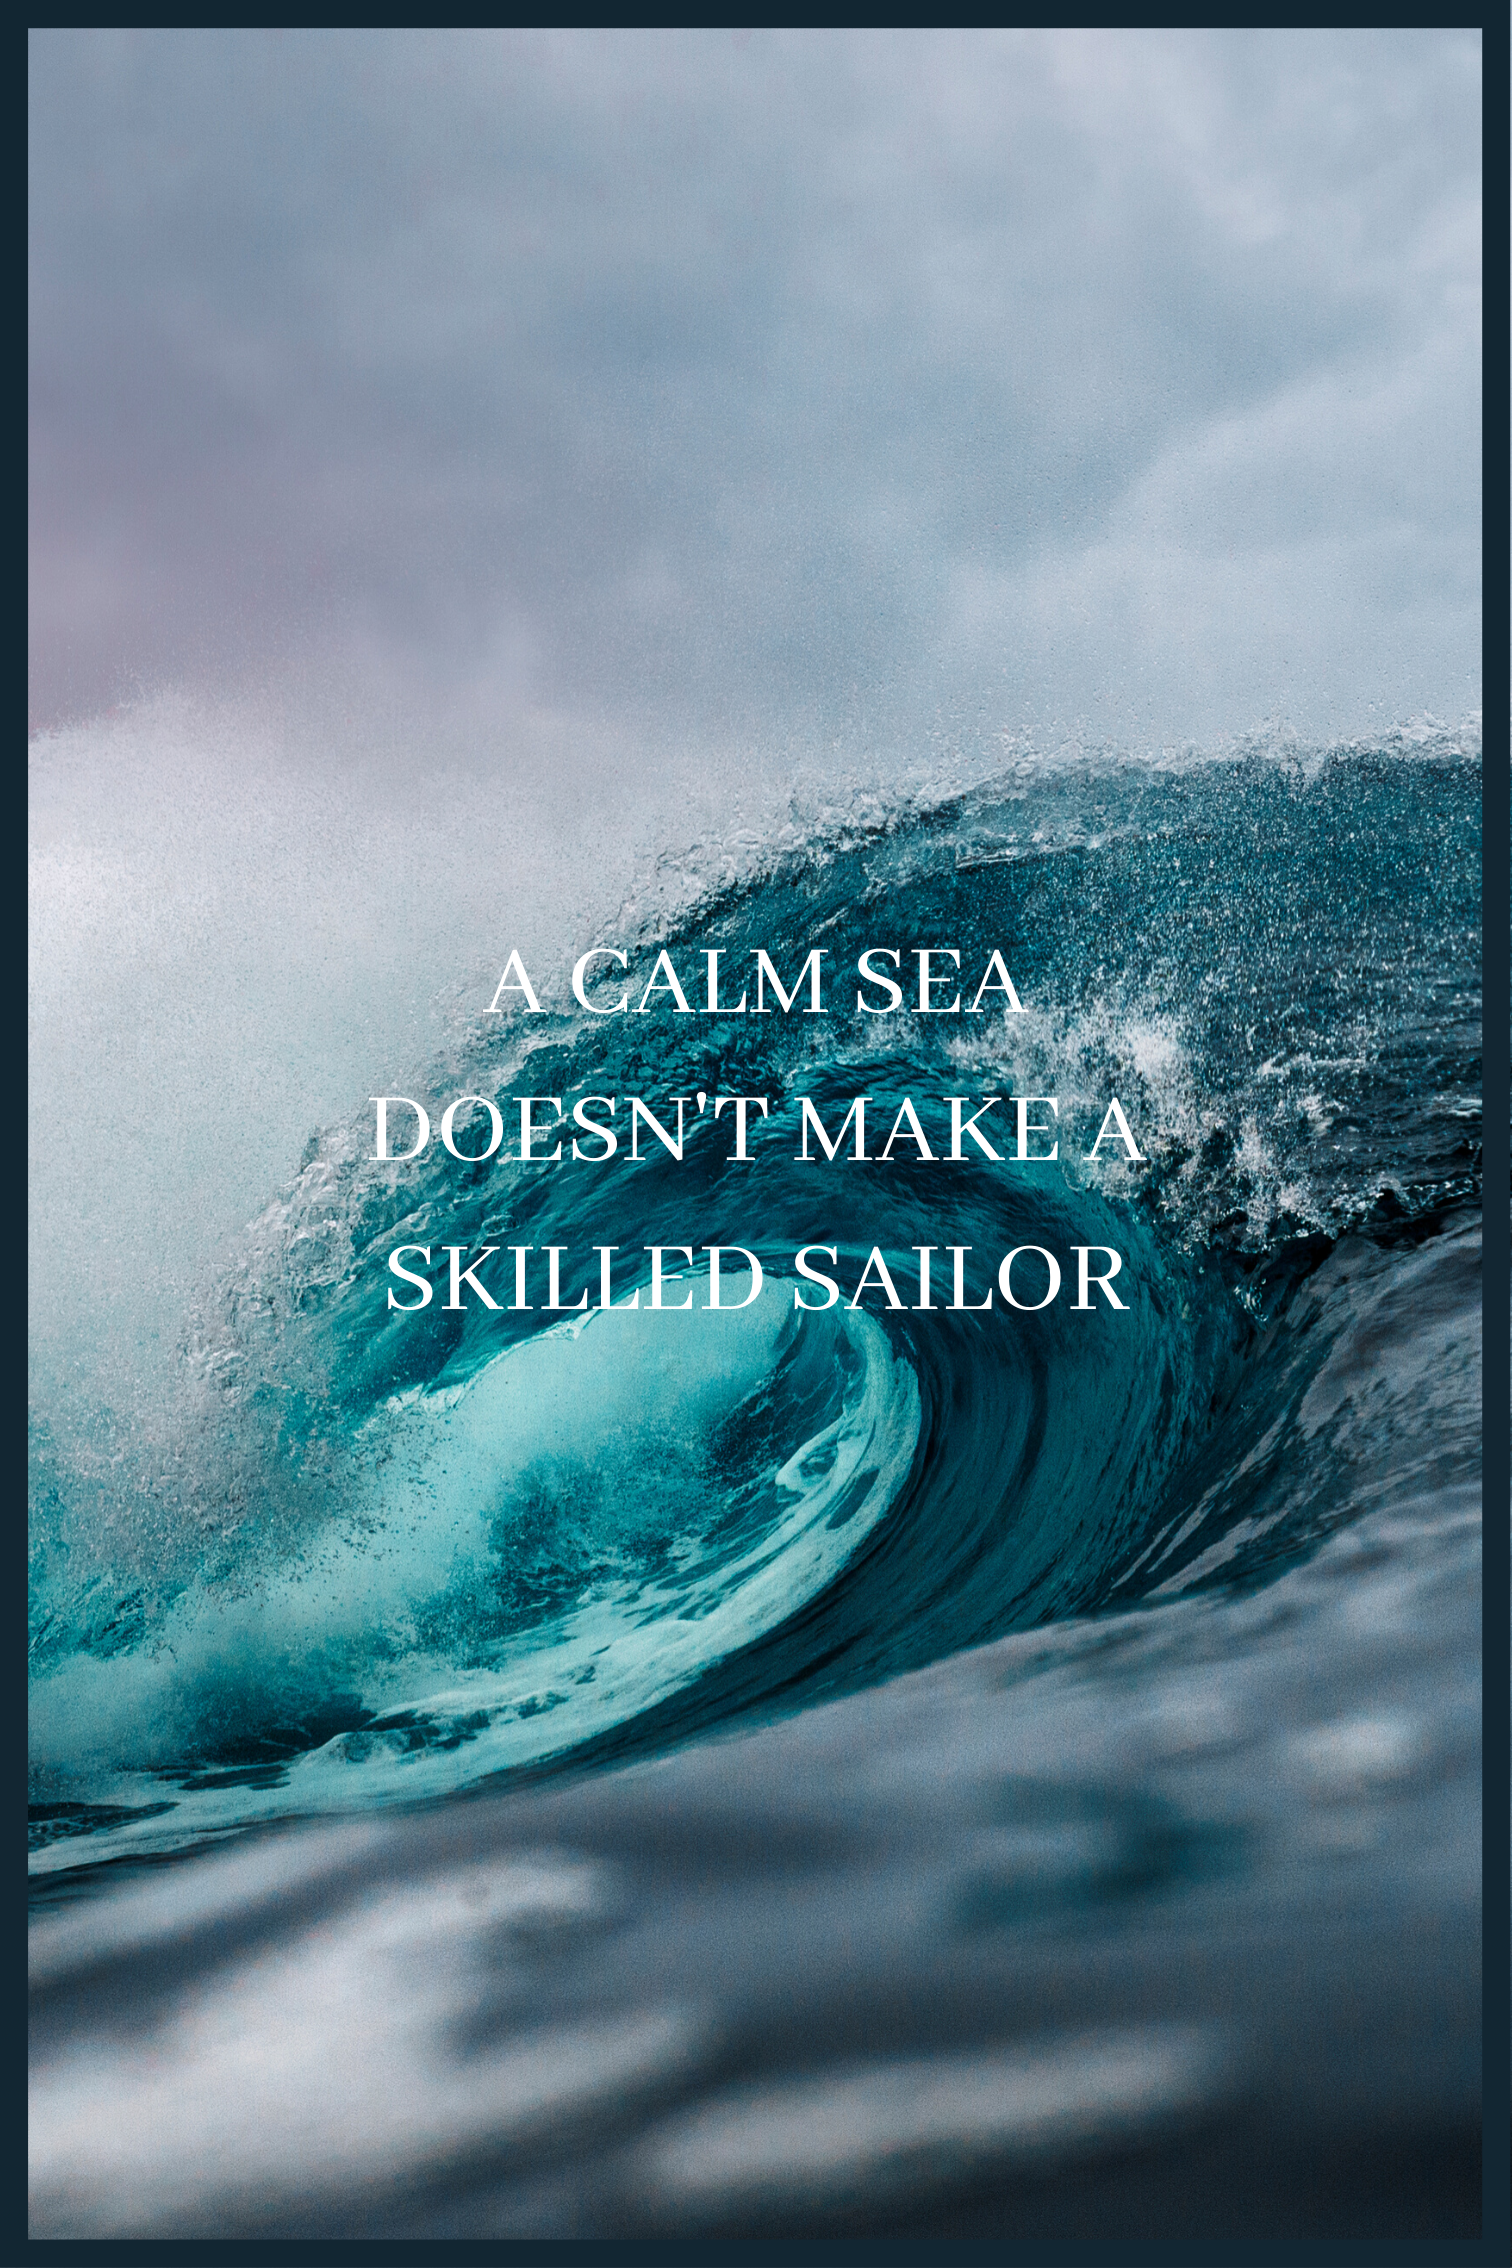 A skilled sailor plakat